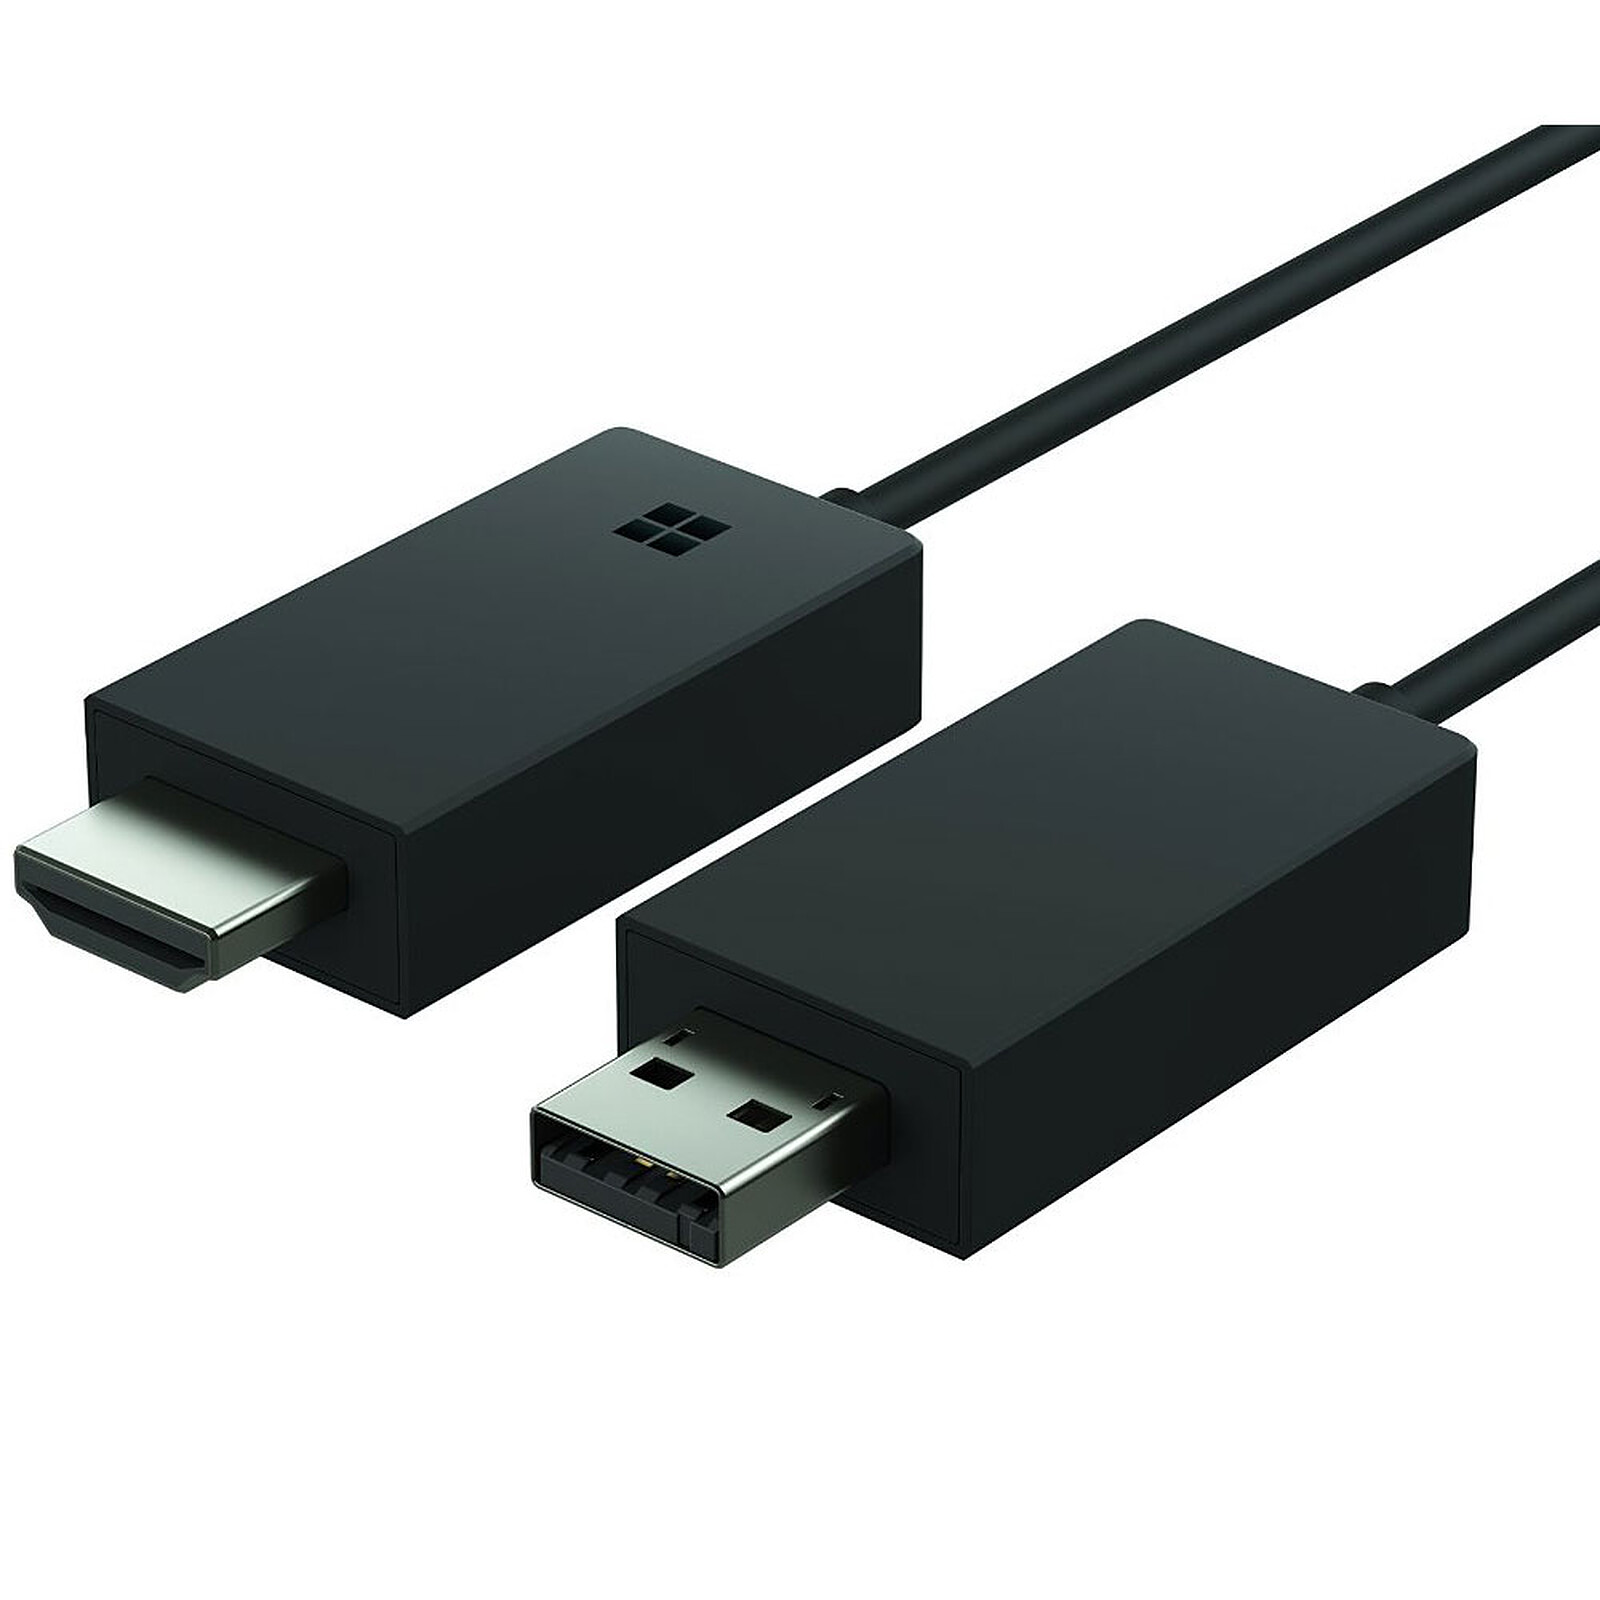 Microsoft Wireless Display Adapter 2 HDMI - Lecteur multimédia